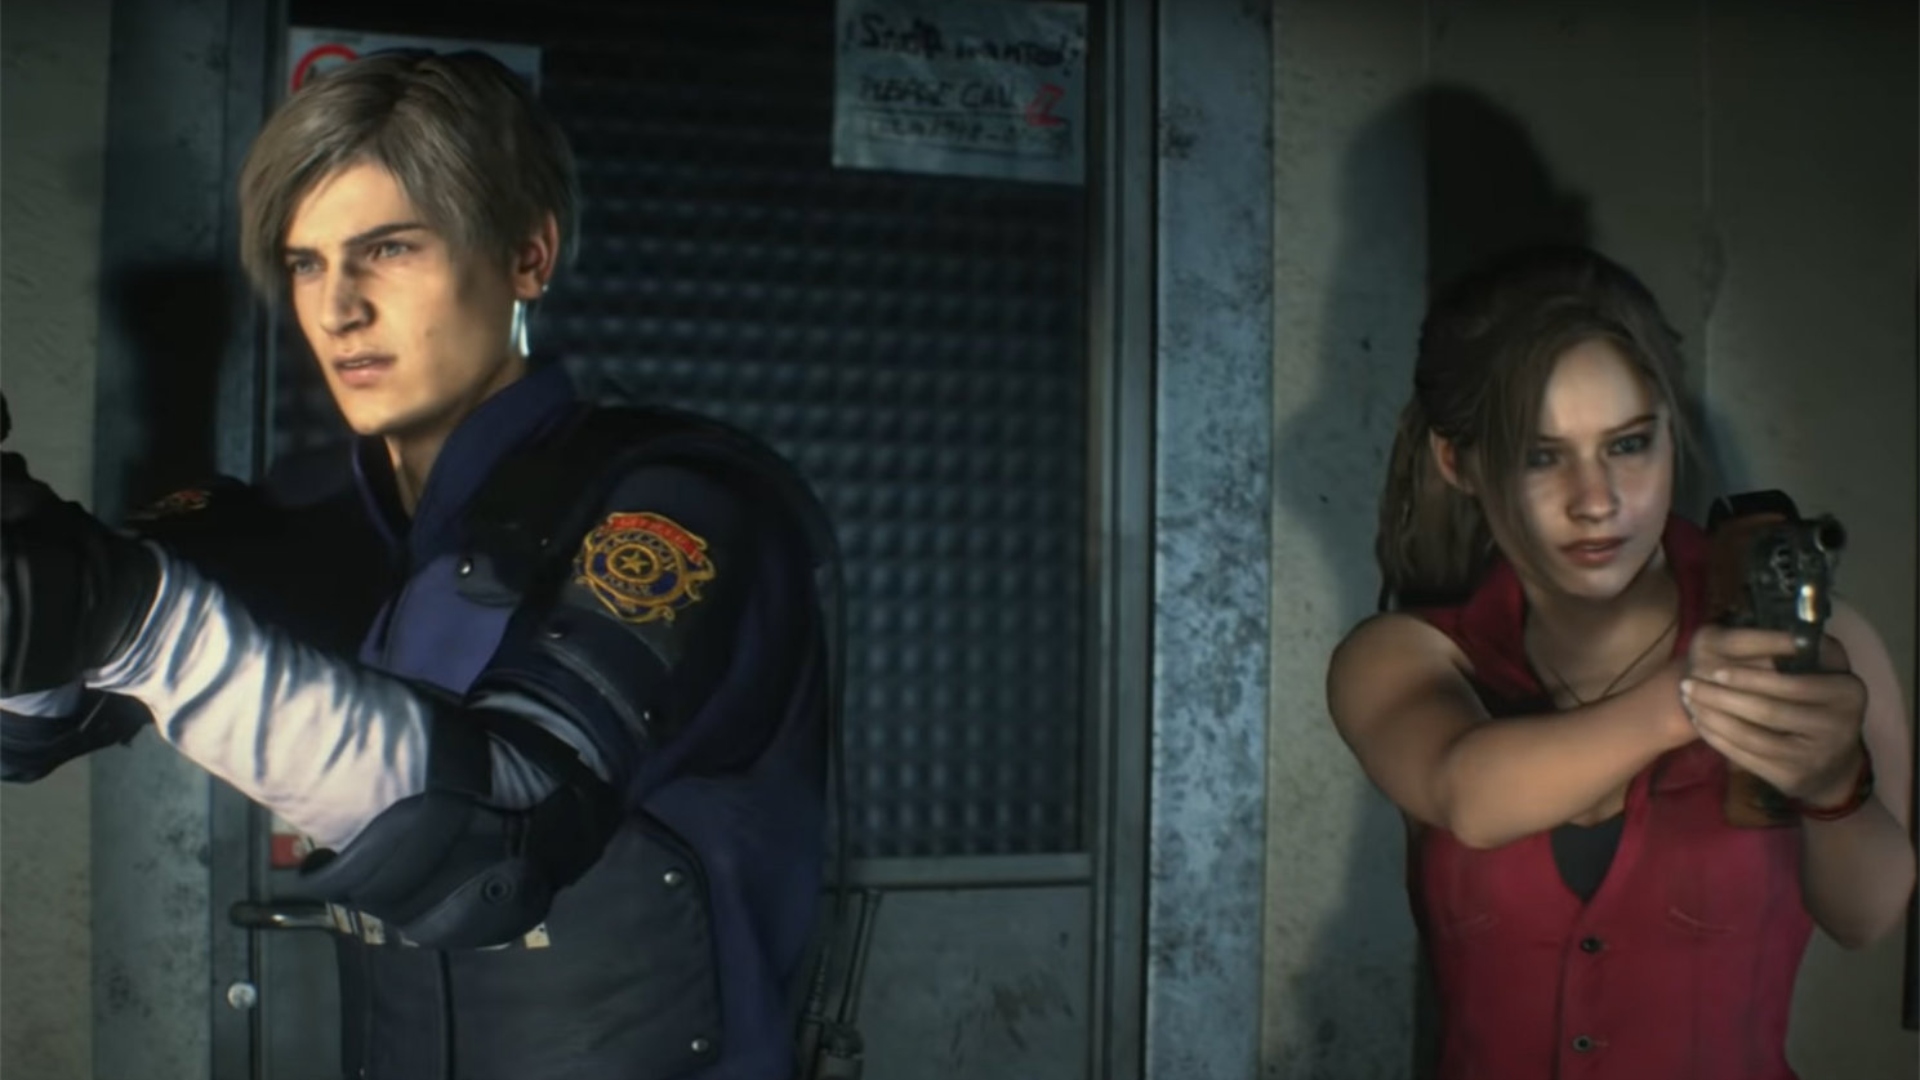 Resident Evil Revelations 2 stars Claire Redfield